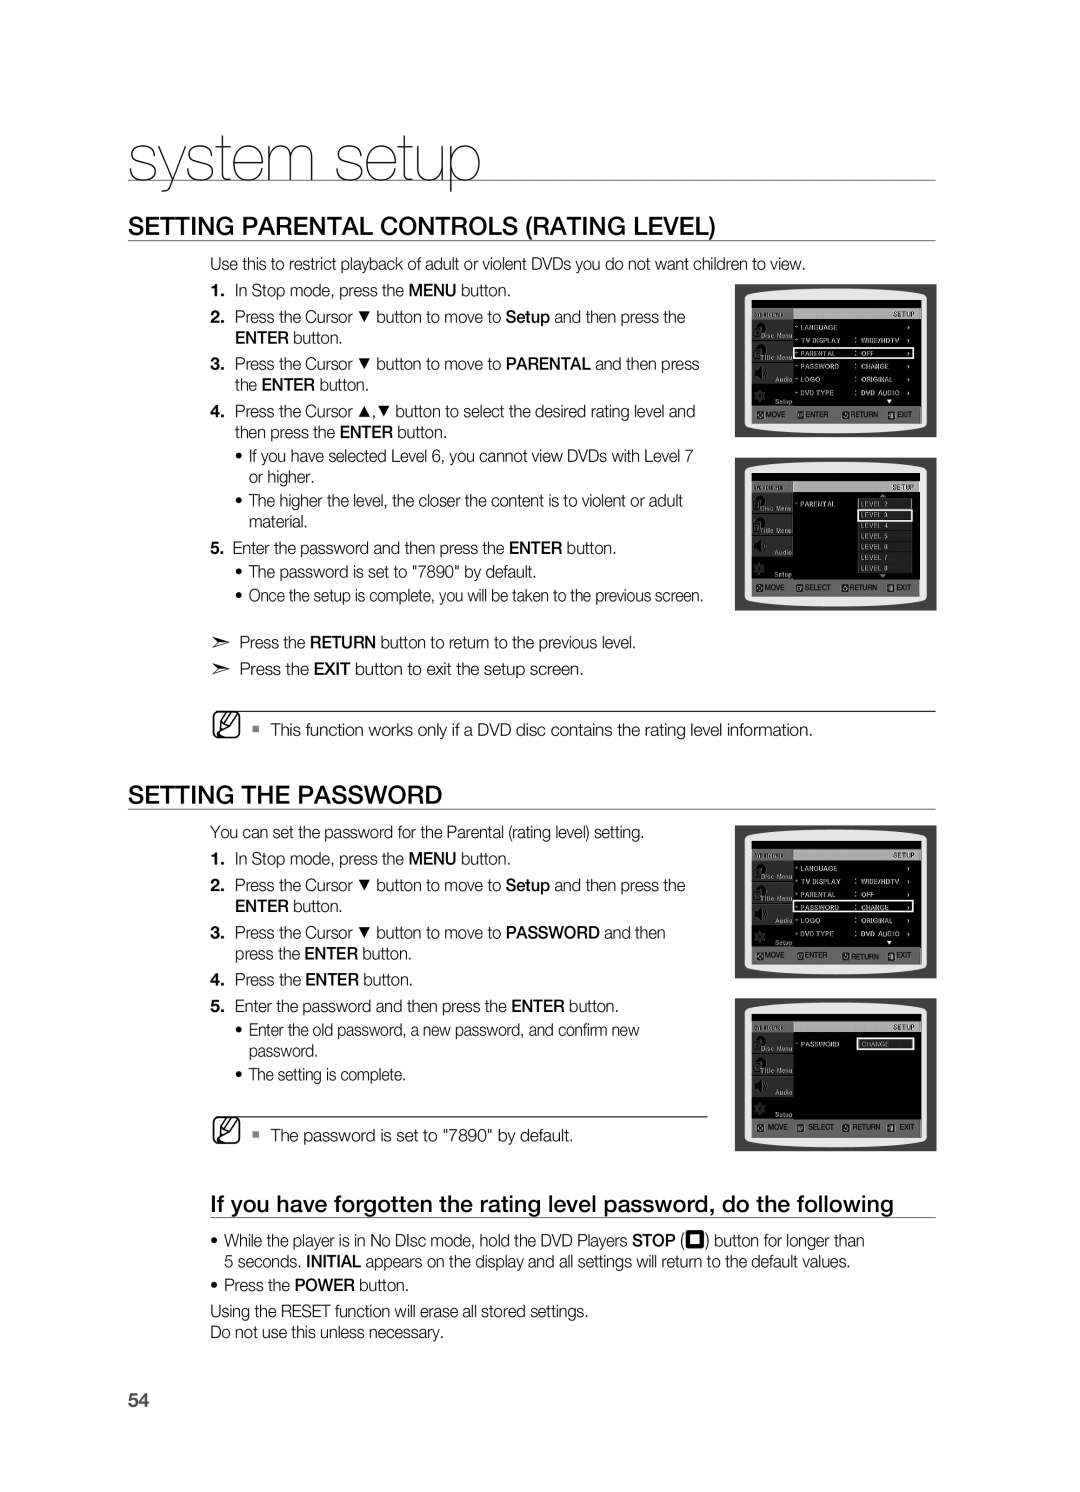 Samsung HT-TZ515 user manual Setting Parental Controls Rating Level, Setting the Password, system setup 